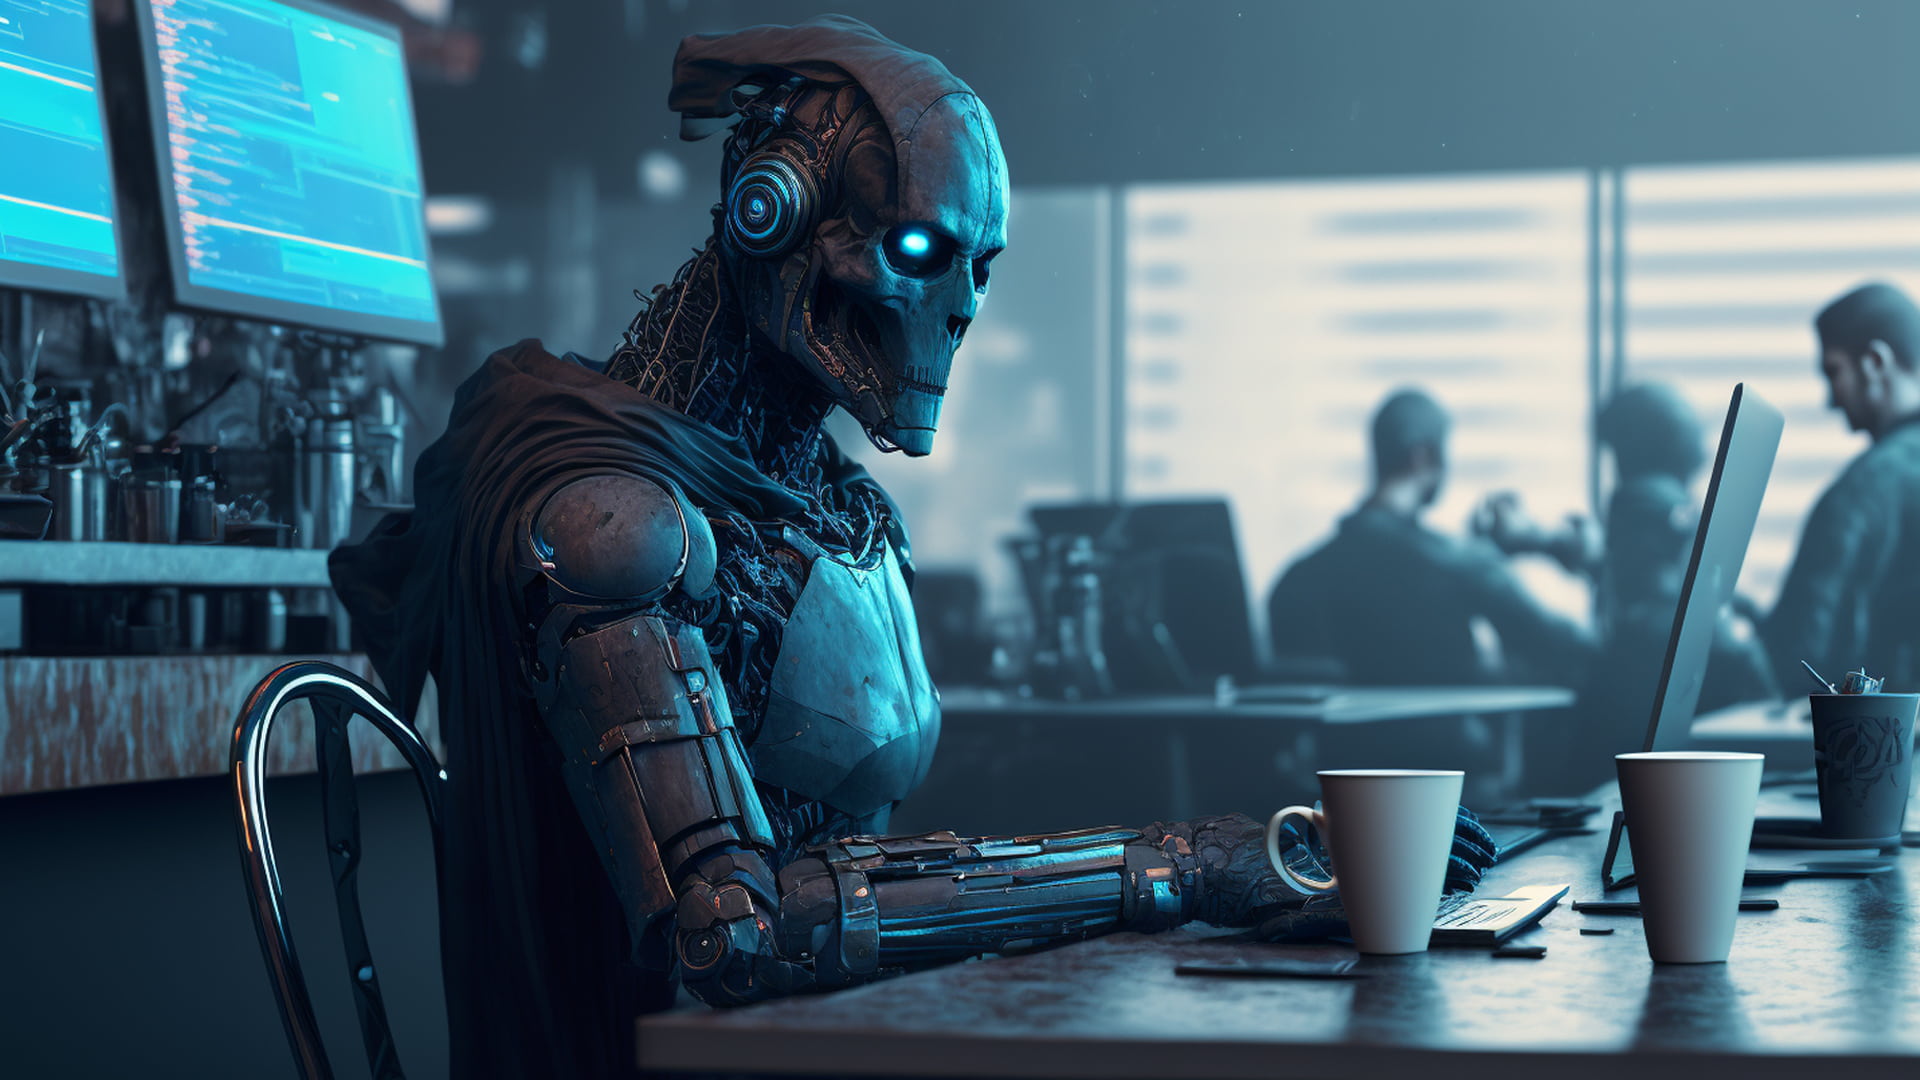 Coffee drinking robot